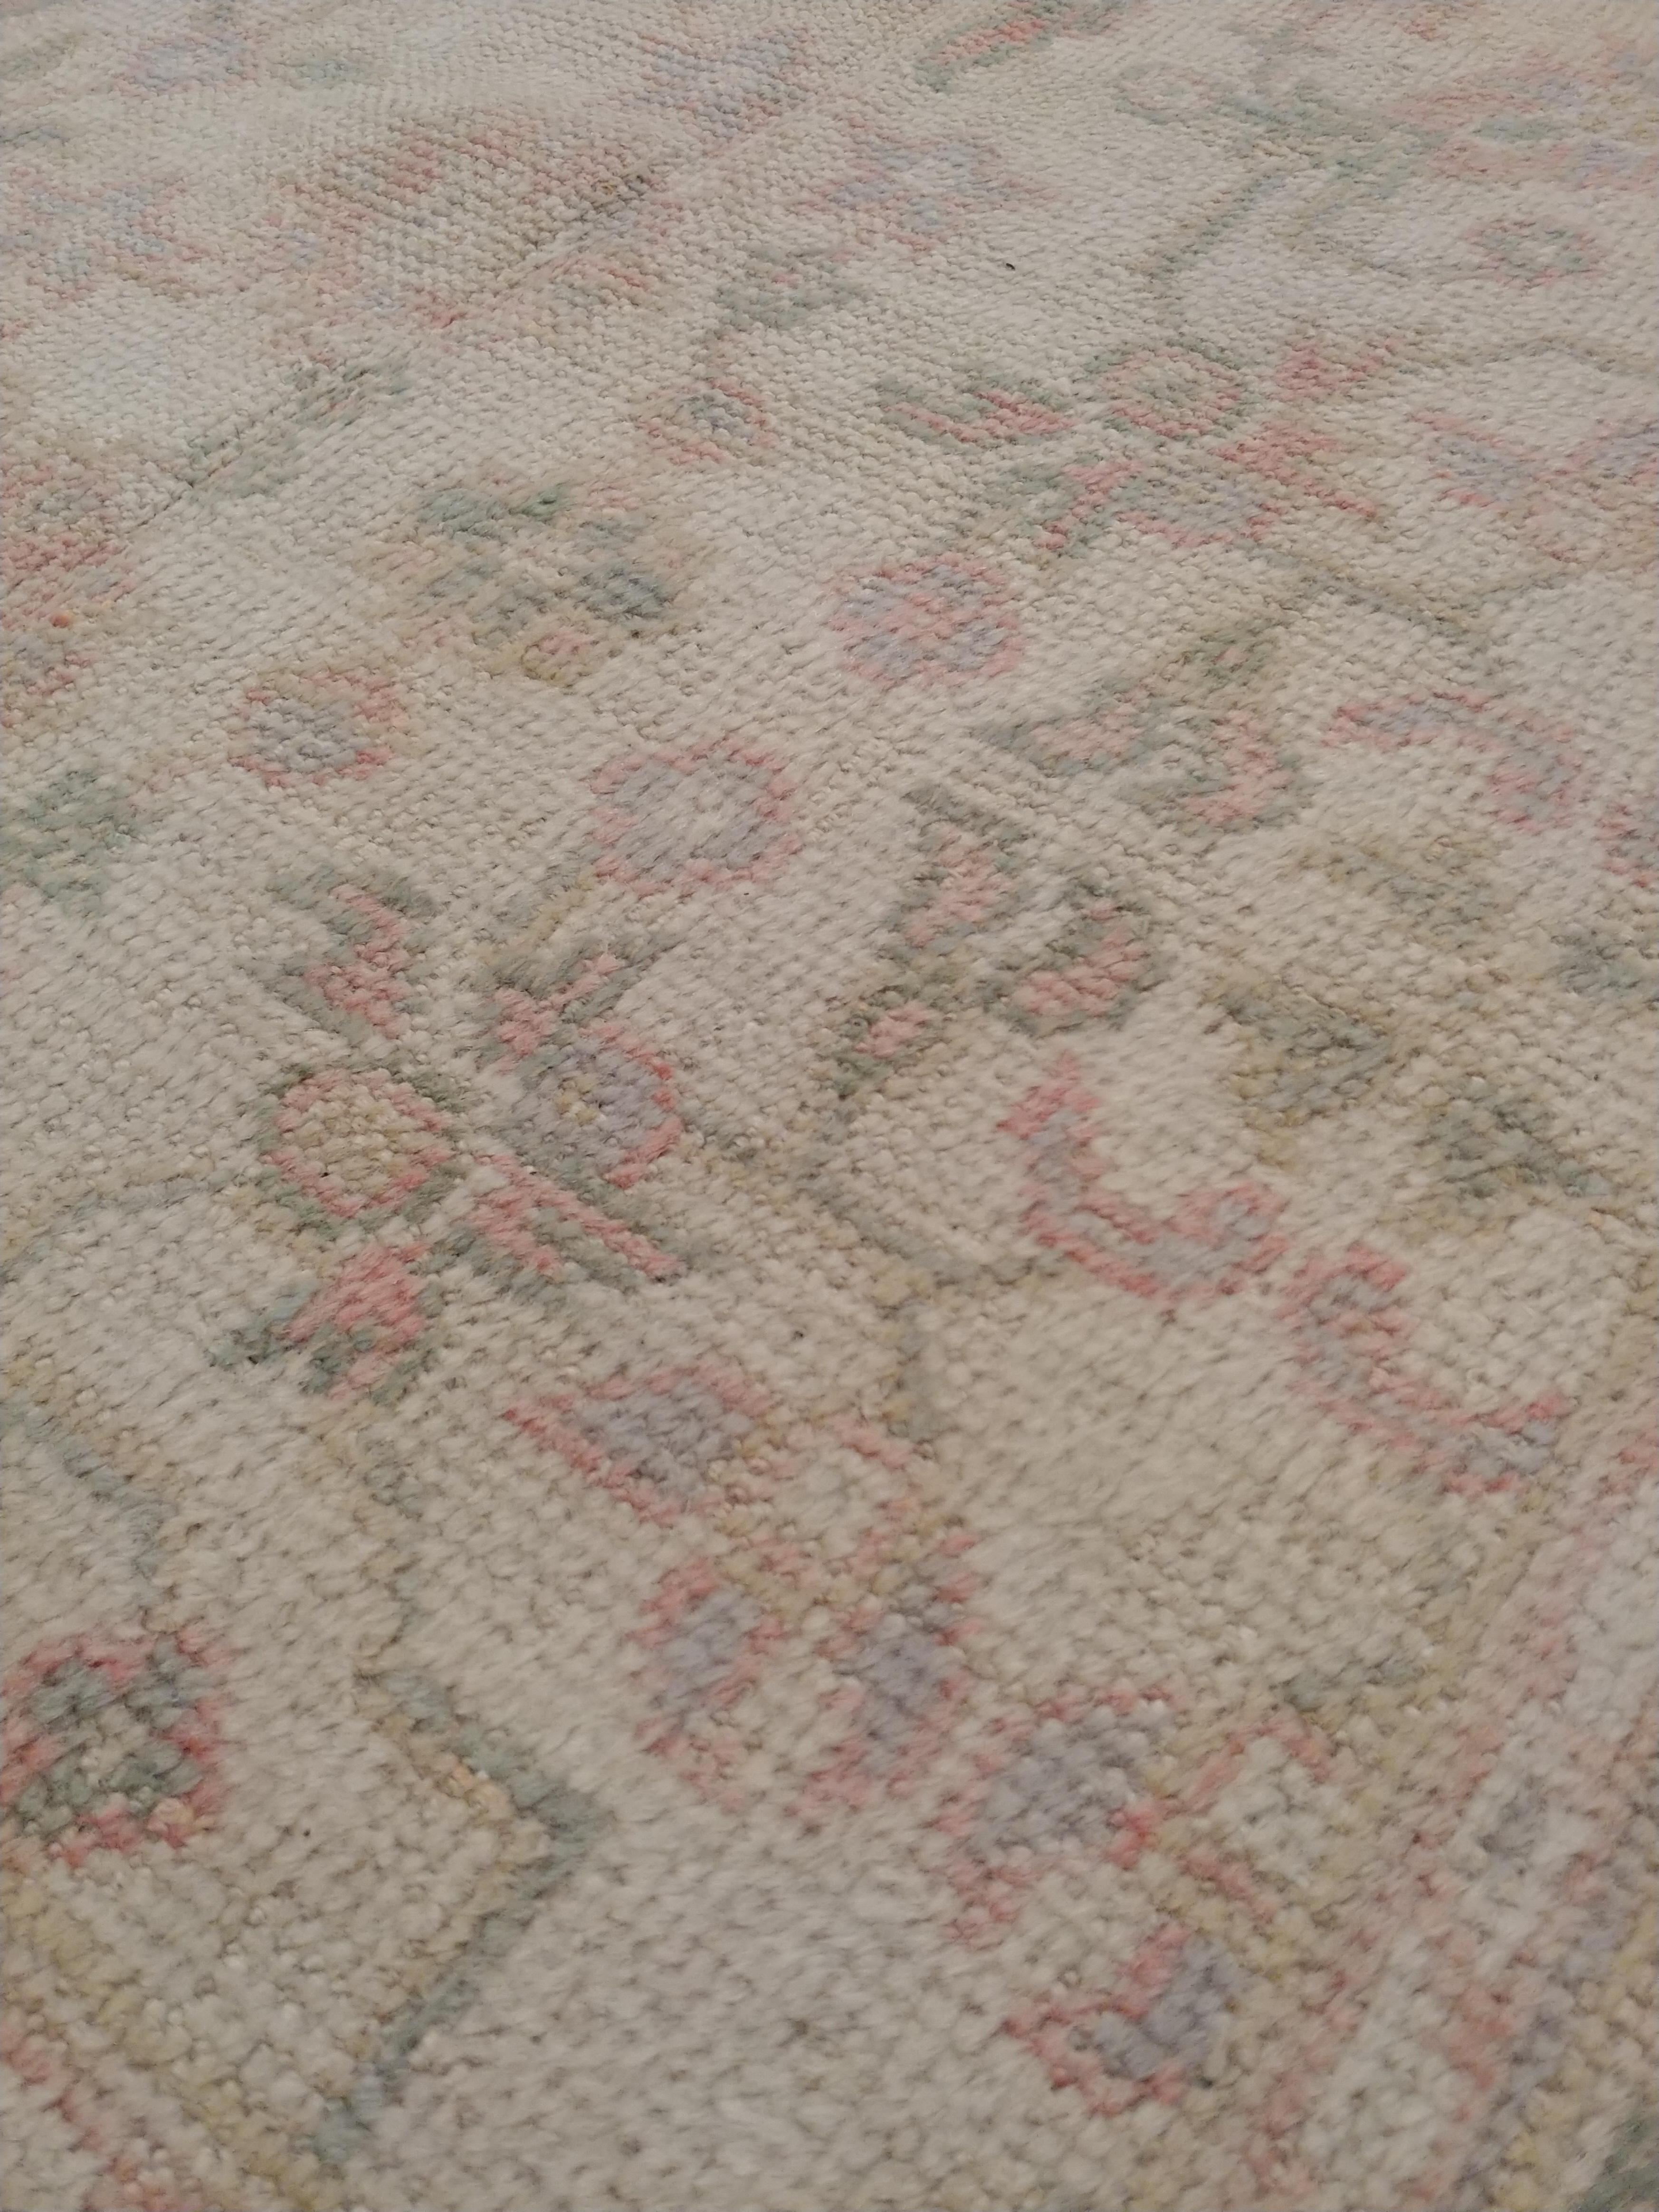 Antique Oushak Carpet, Handmade Turkish Oriental Rug, Beige, Taupe, Soft For Sale 5